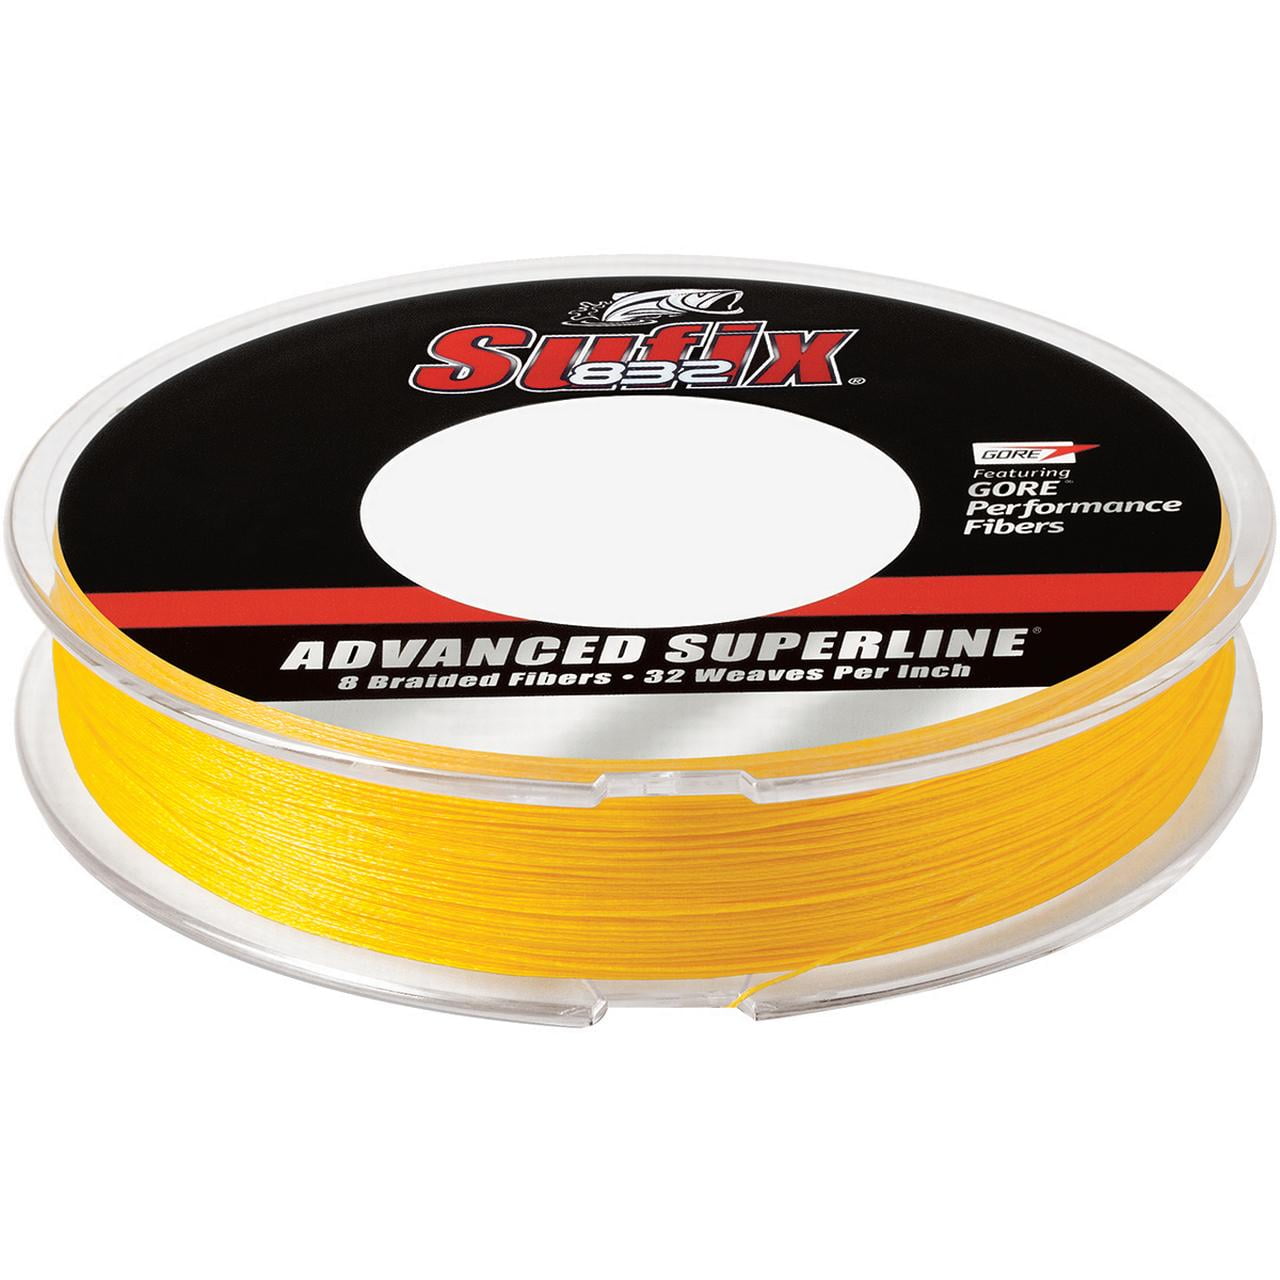 Sufix 150 Yard 832 Advanced Superline Braid Fishing Line - 10 lb. - Hi-Vis  Yellow